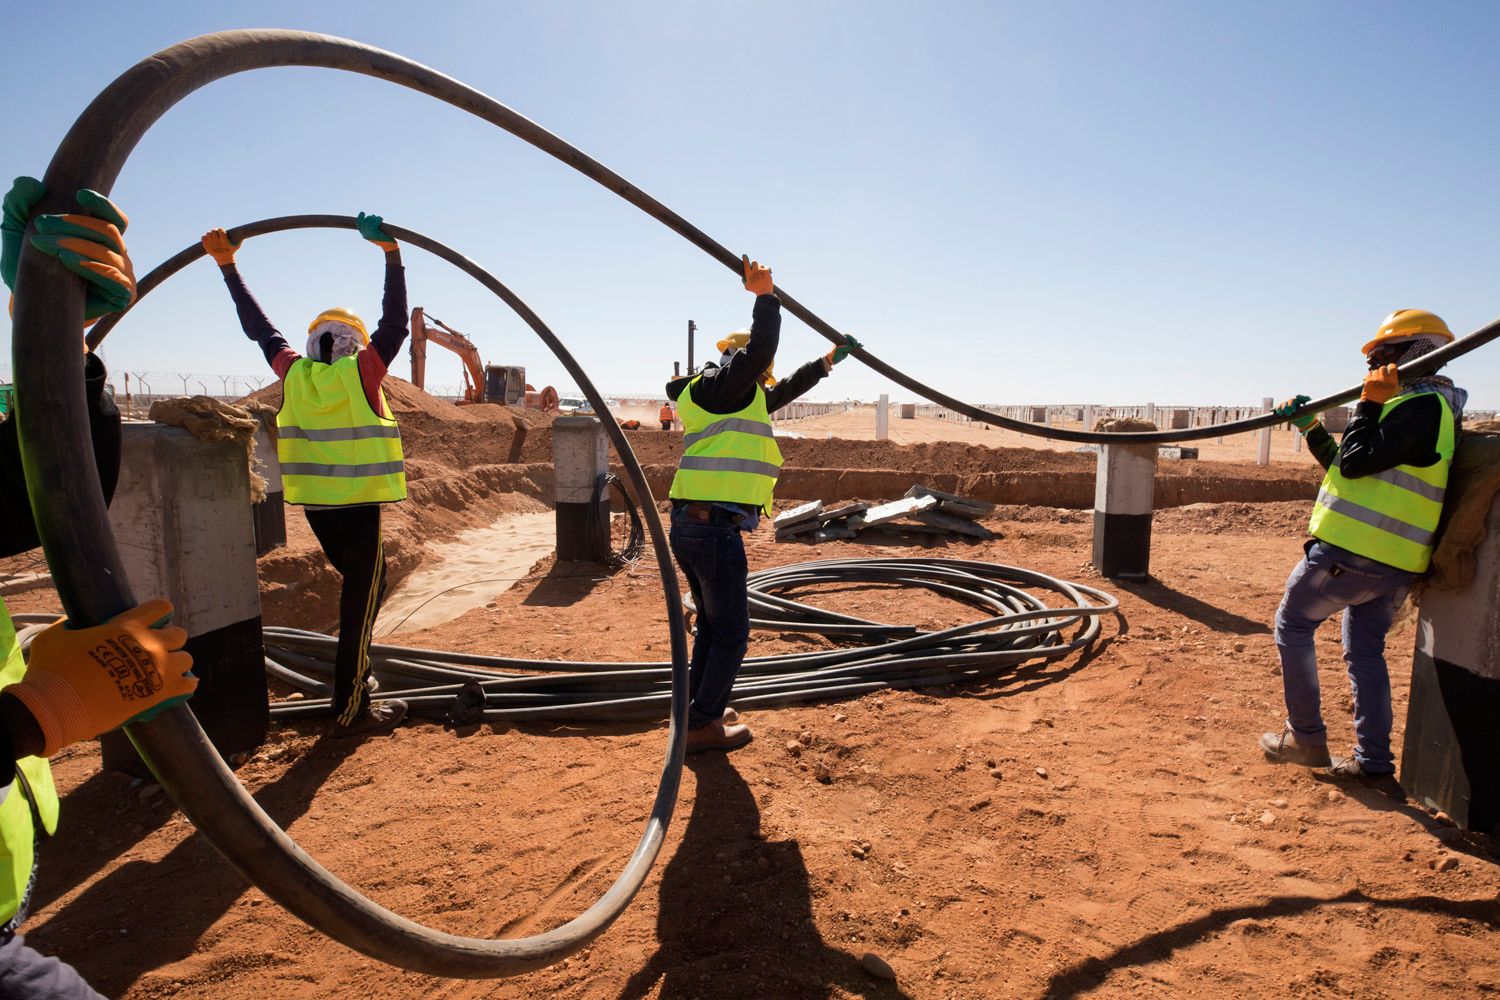 Mega Benban workers carry medium voltage cables in the Benban Solar Park in Benban, Egypt on December 11, 2018. Photo © Dominic Chavez/International Finance Corporation